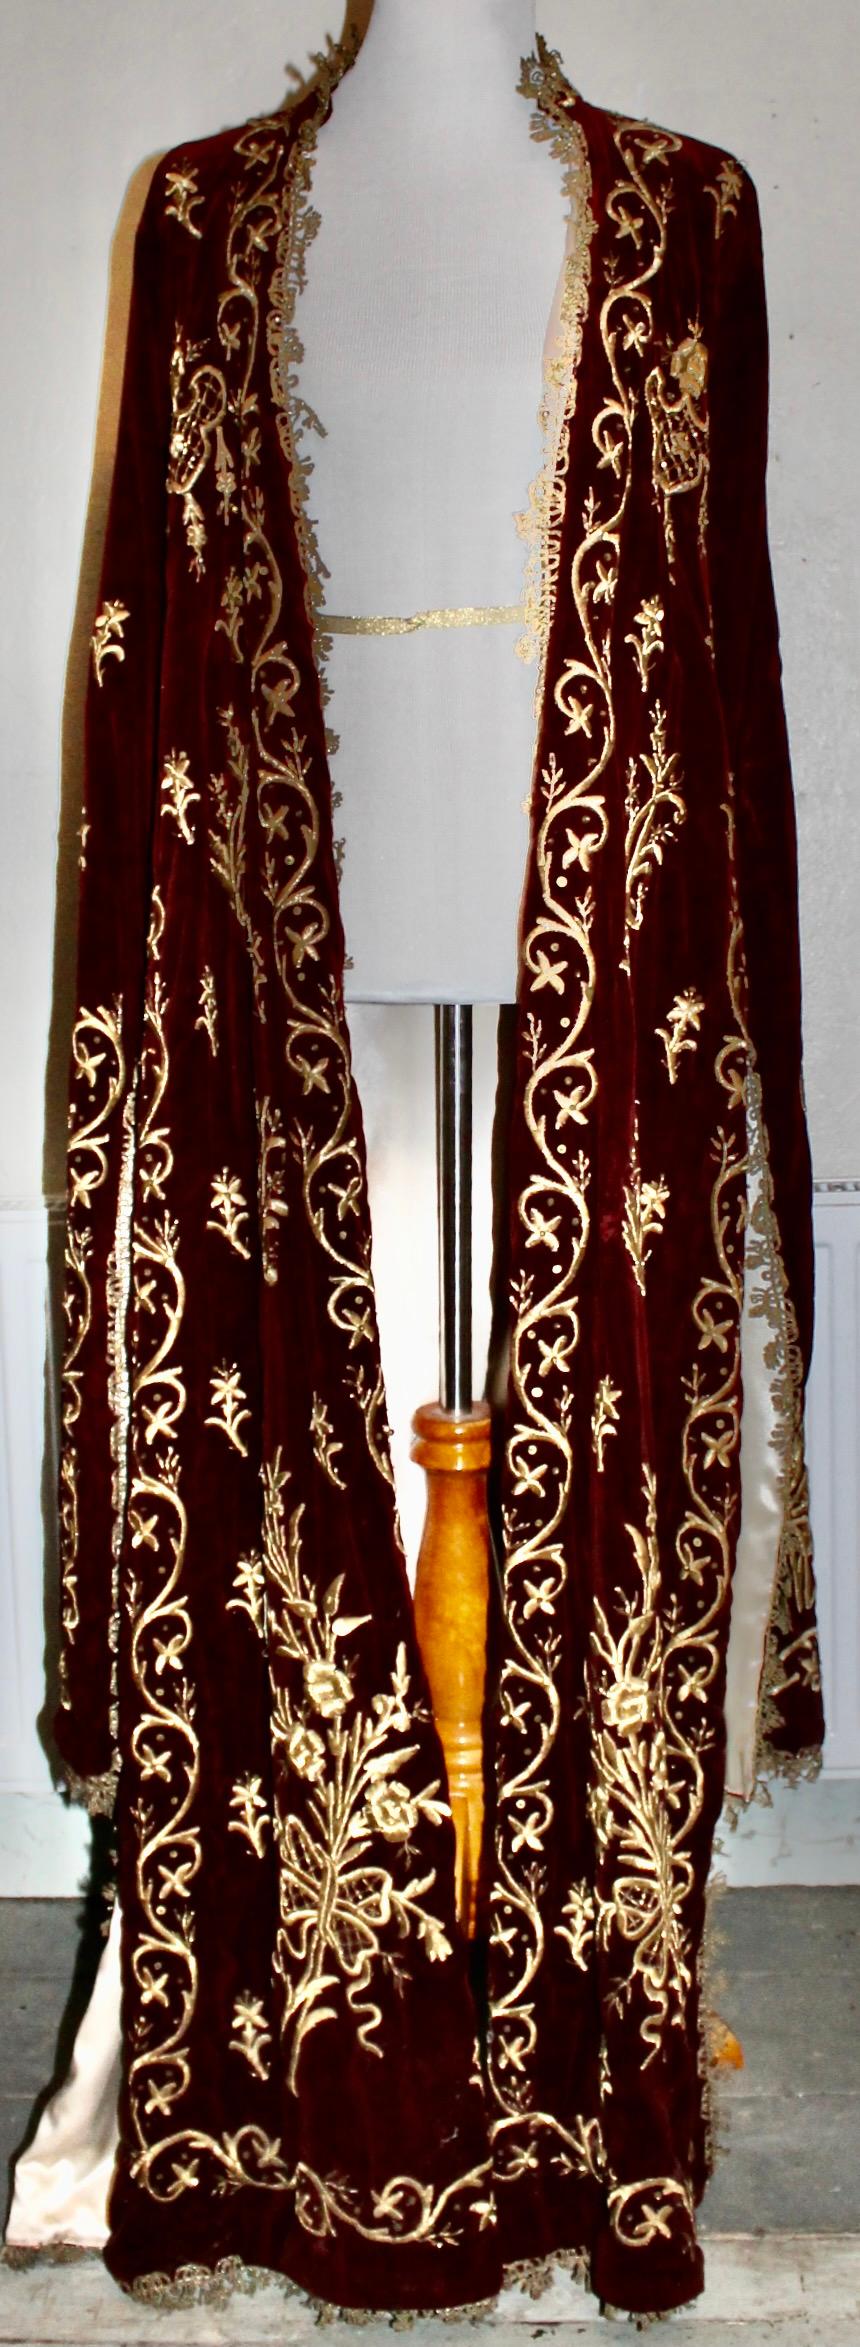 Ottoman Turkish 'Bindalli' Wedding Dress Hand Embroidered Gold Thread Late 19c. For Sale 7